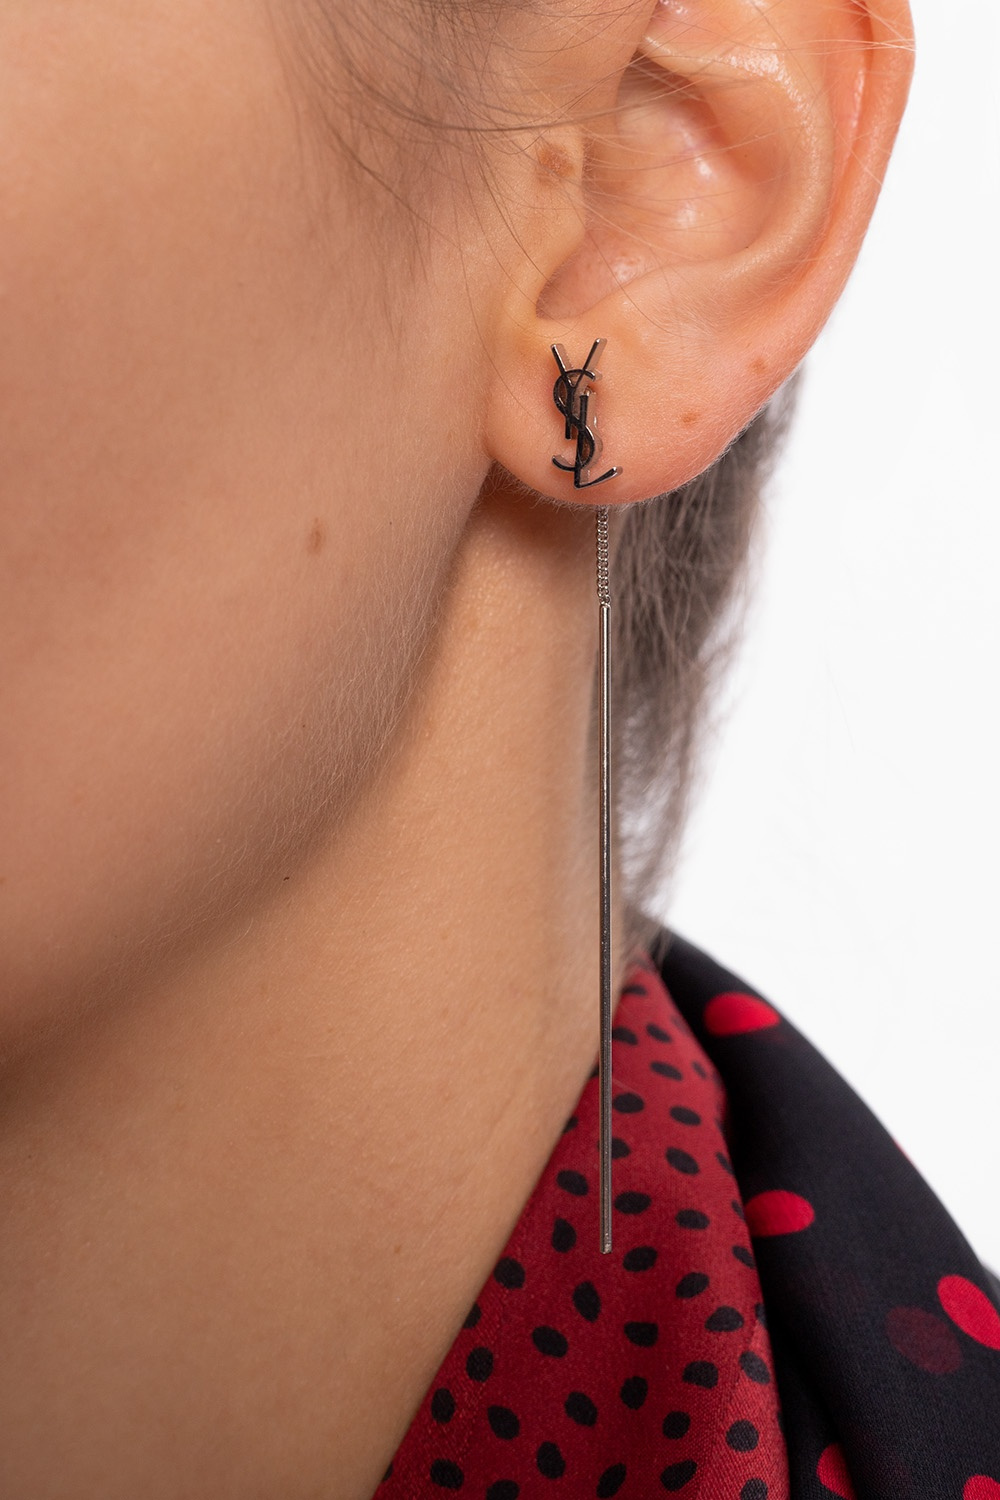 Saint Laurent ‘Opyum’ earrings with logo